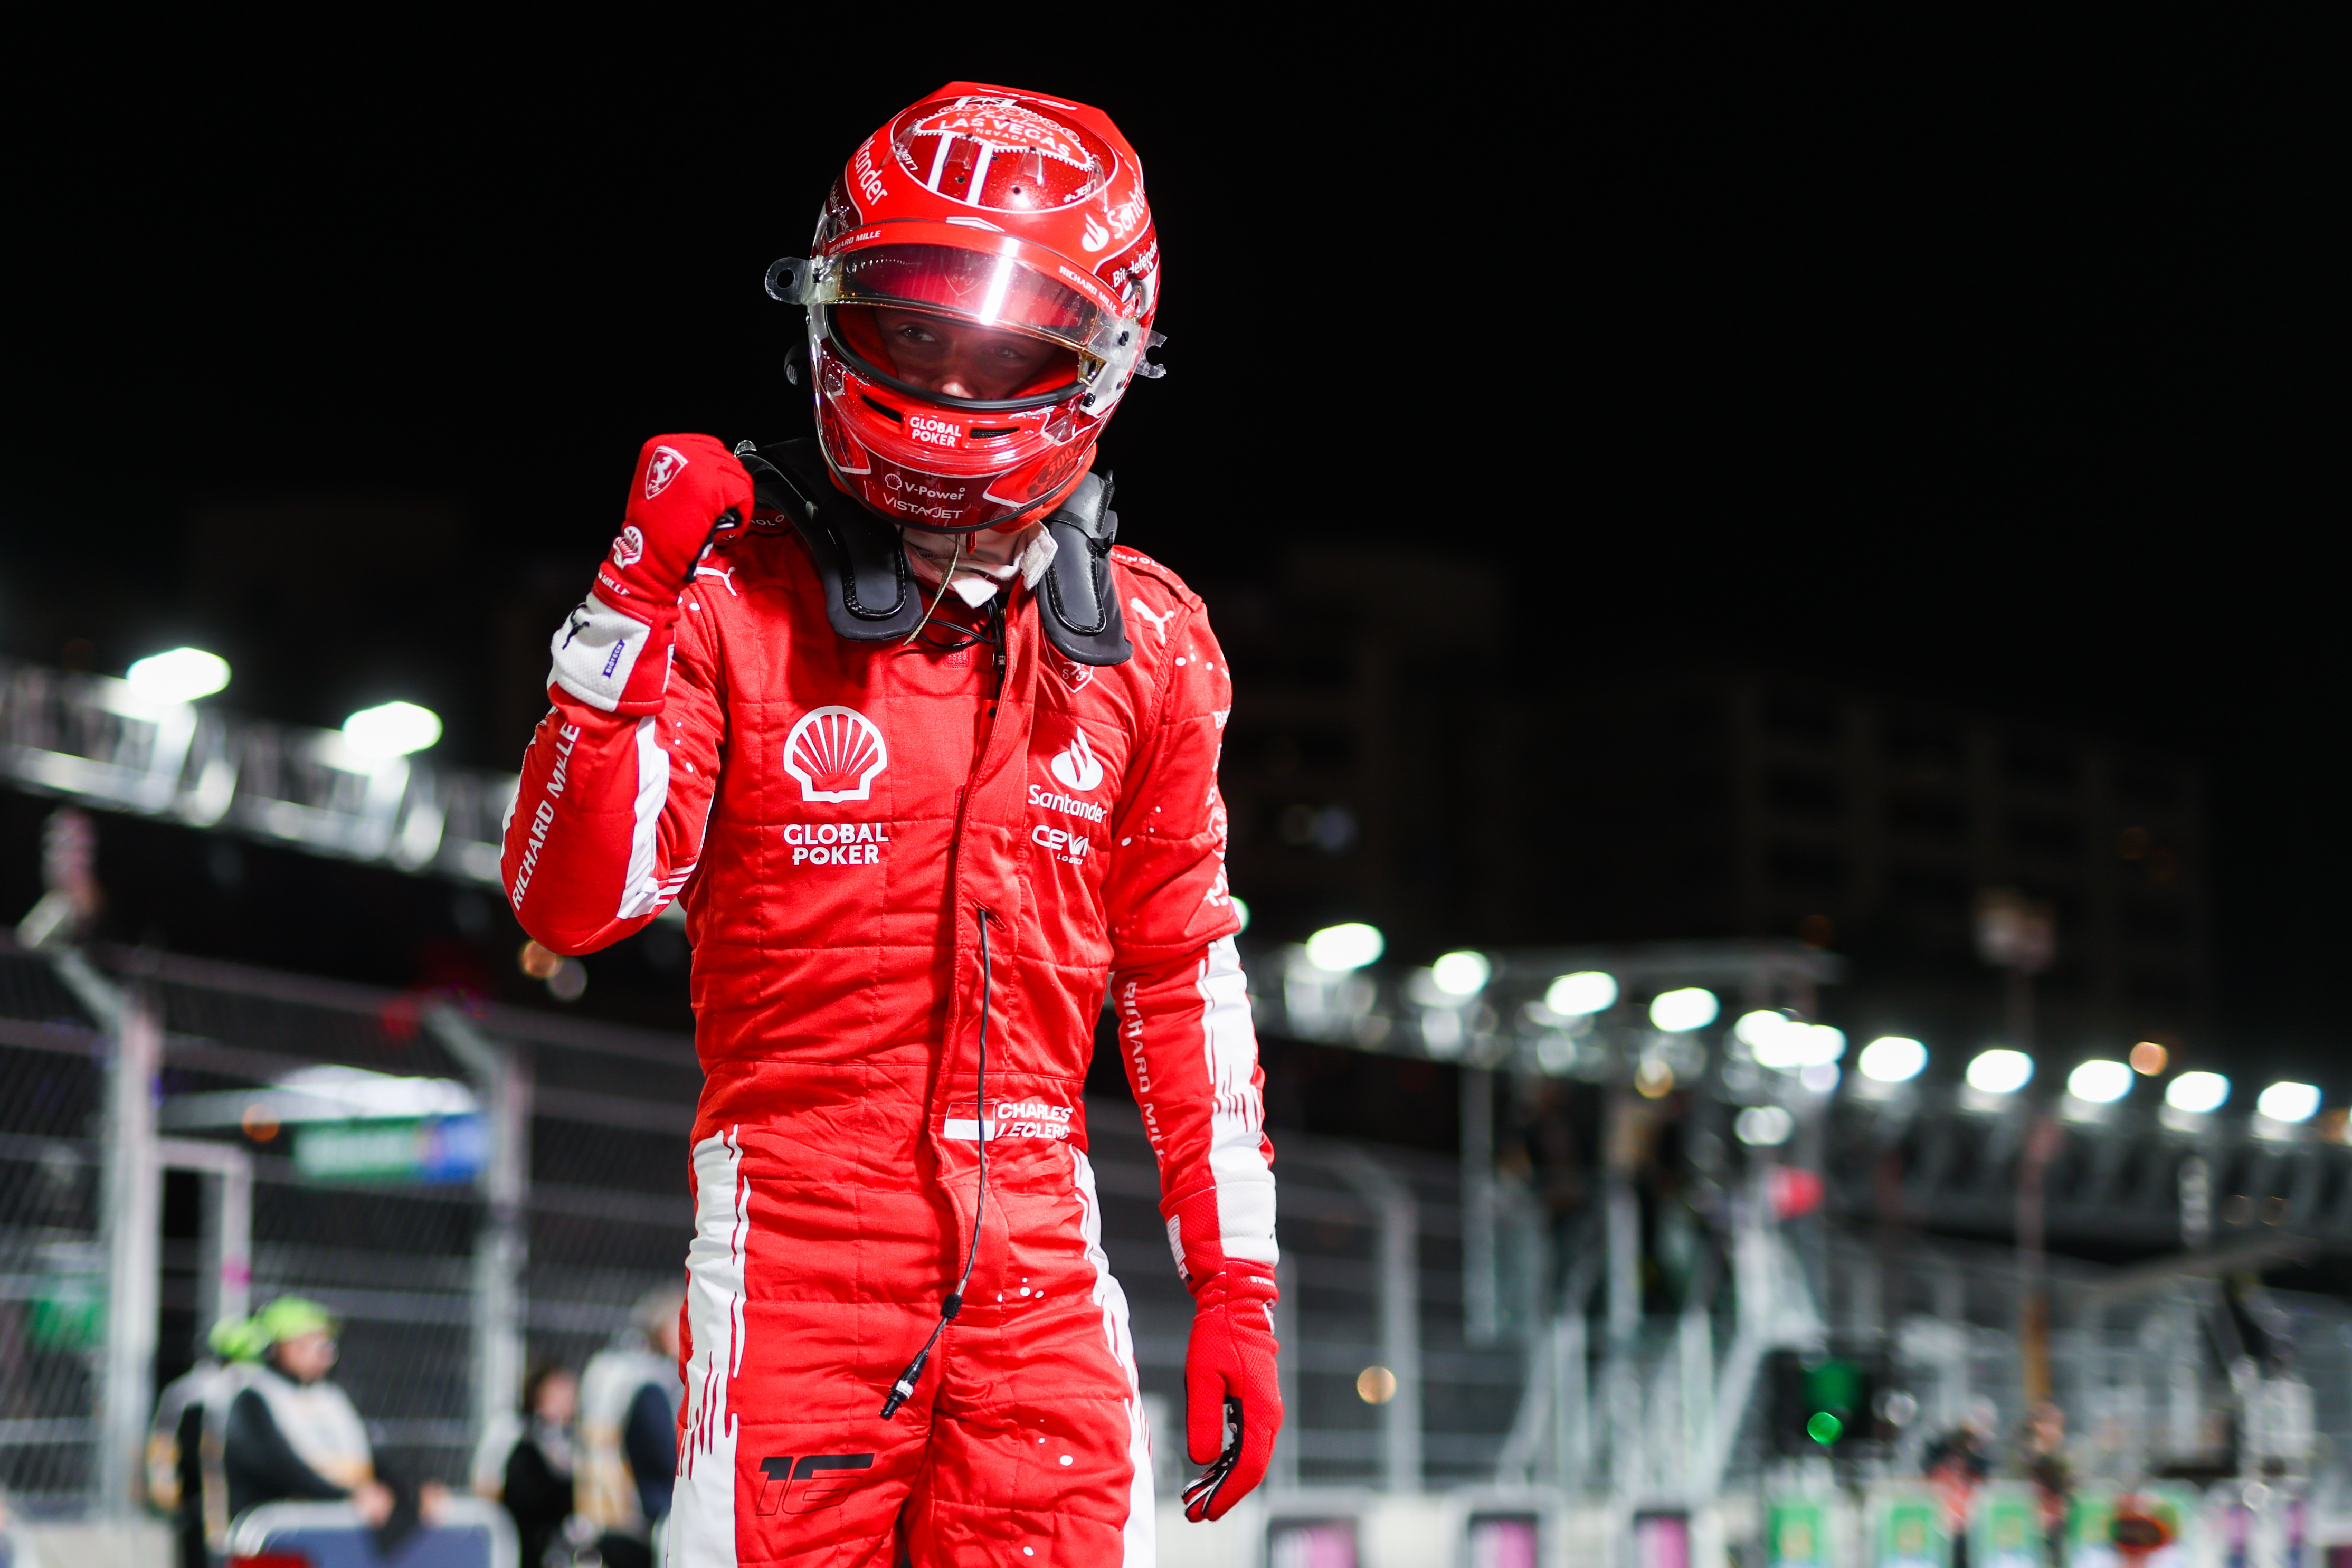 Charles Leclerc Earns Pole Position for F1 Las Vegas Grand Prix